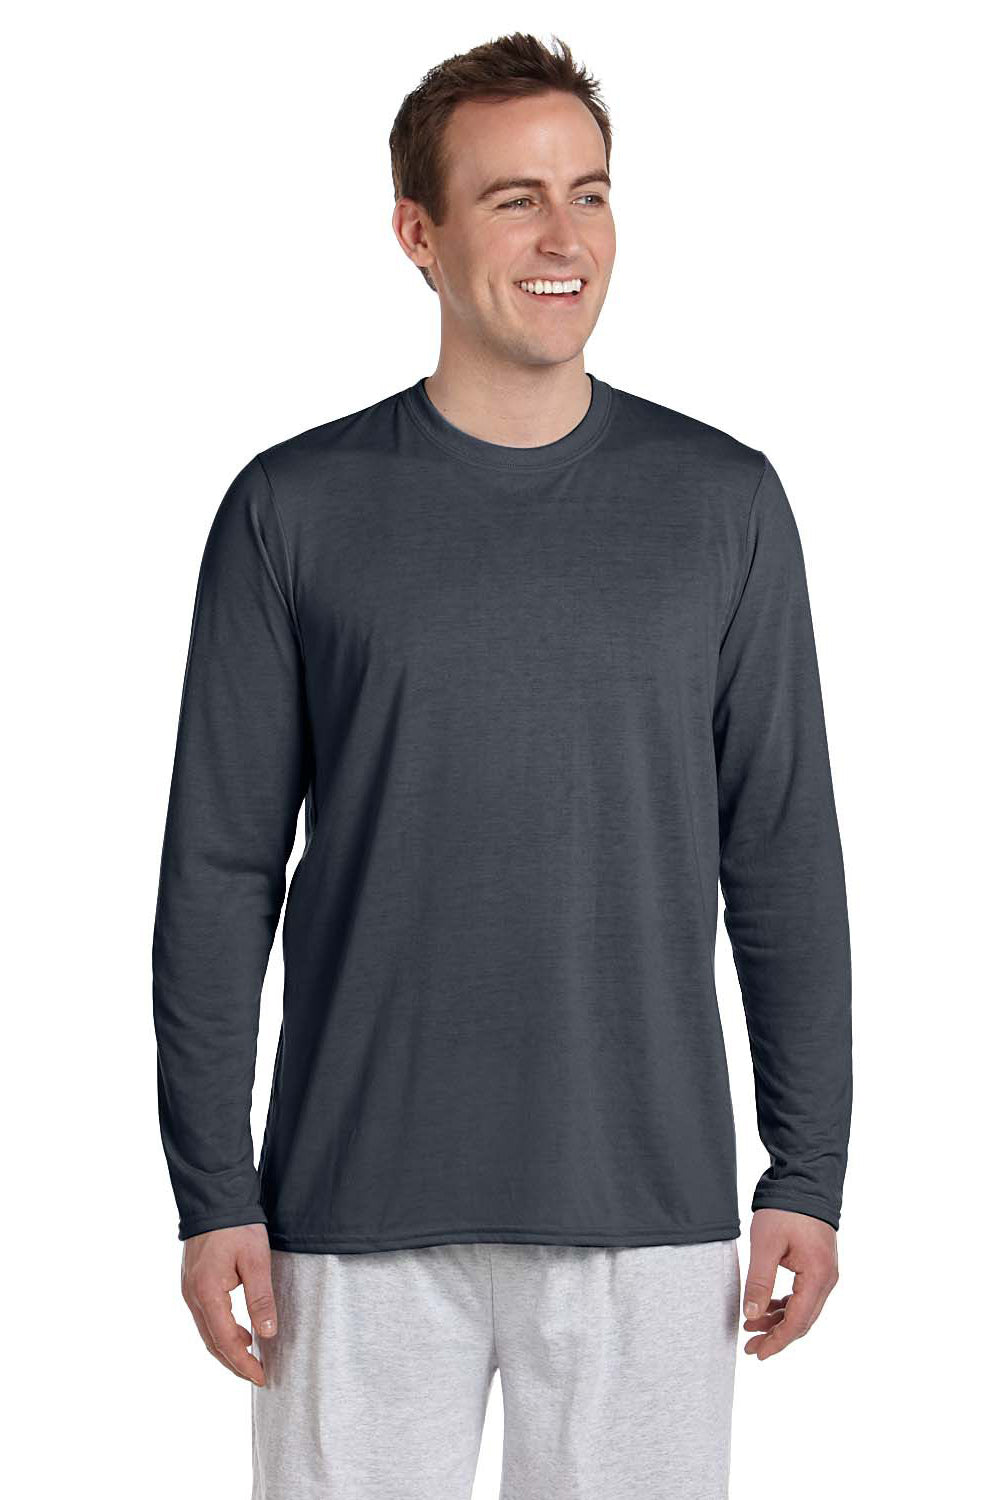 Gildan G424 Mens Performance Jersey Moisture Wicking Long Sleeve Crewneck T-Shirt Charcoal Grey Front